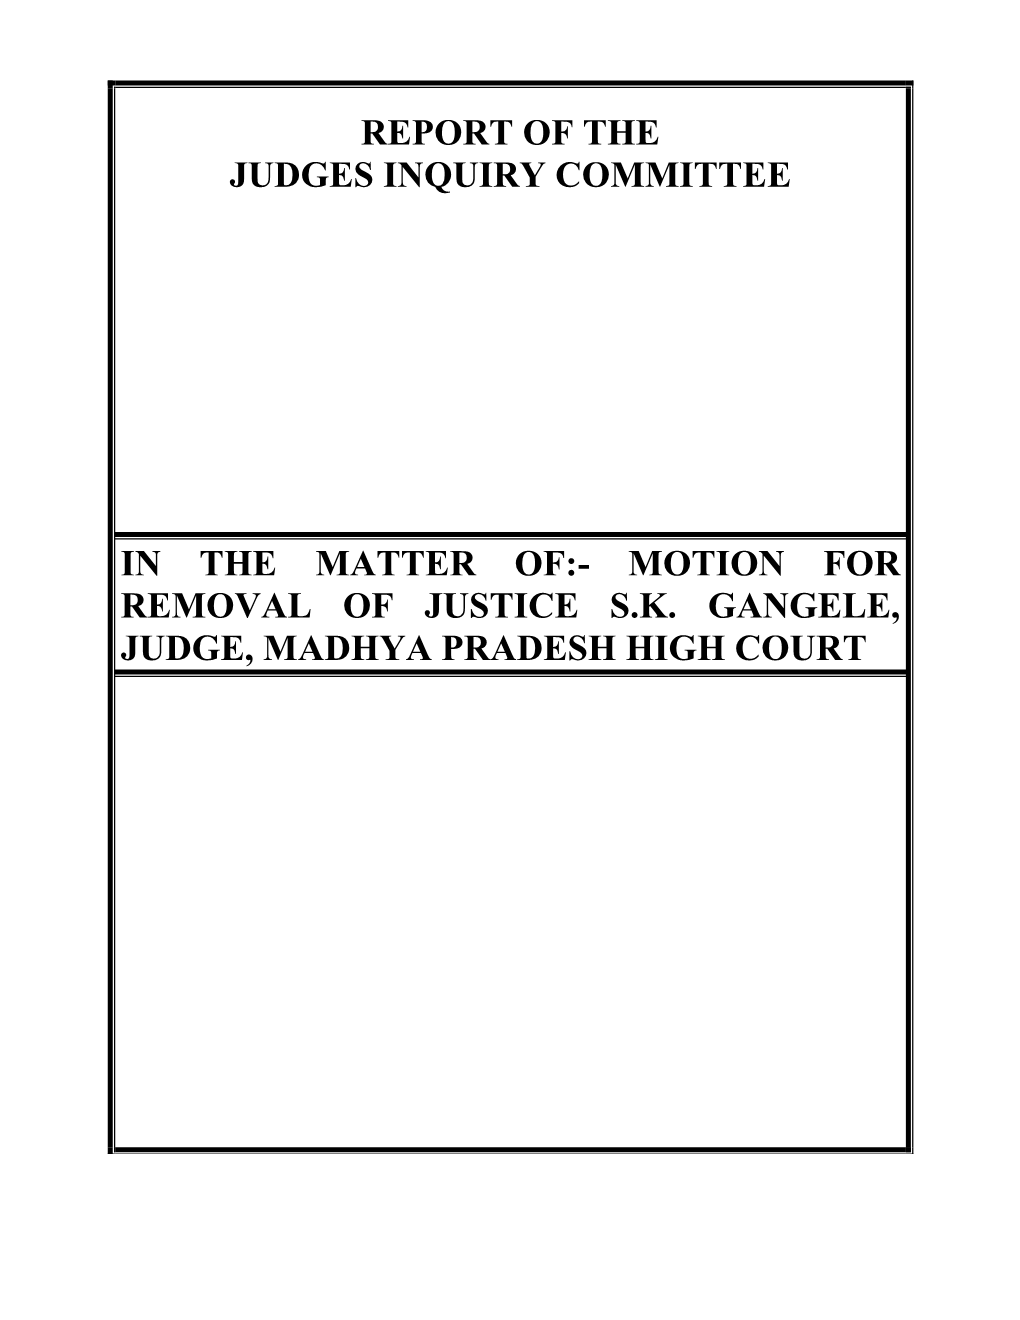 Motion for Removal of Justice Sk Gangele, Judge, Madhya Pradesh